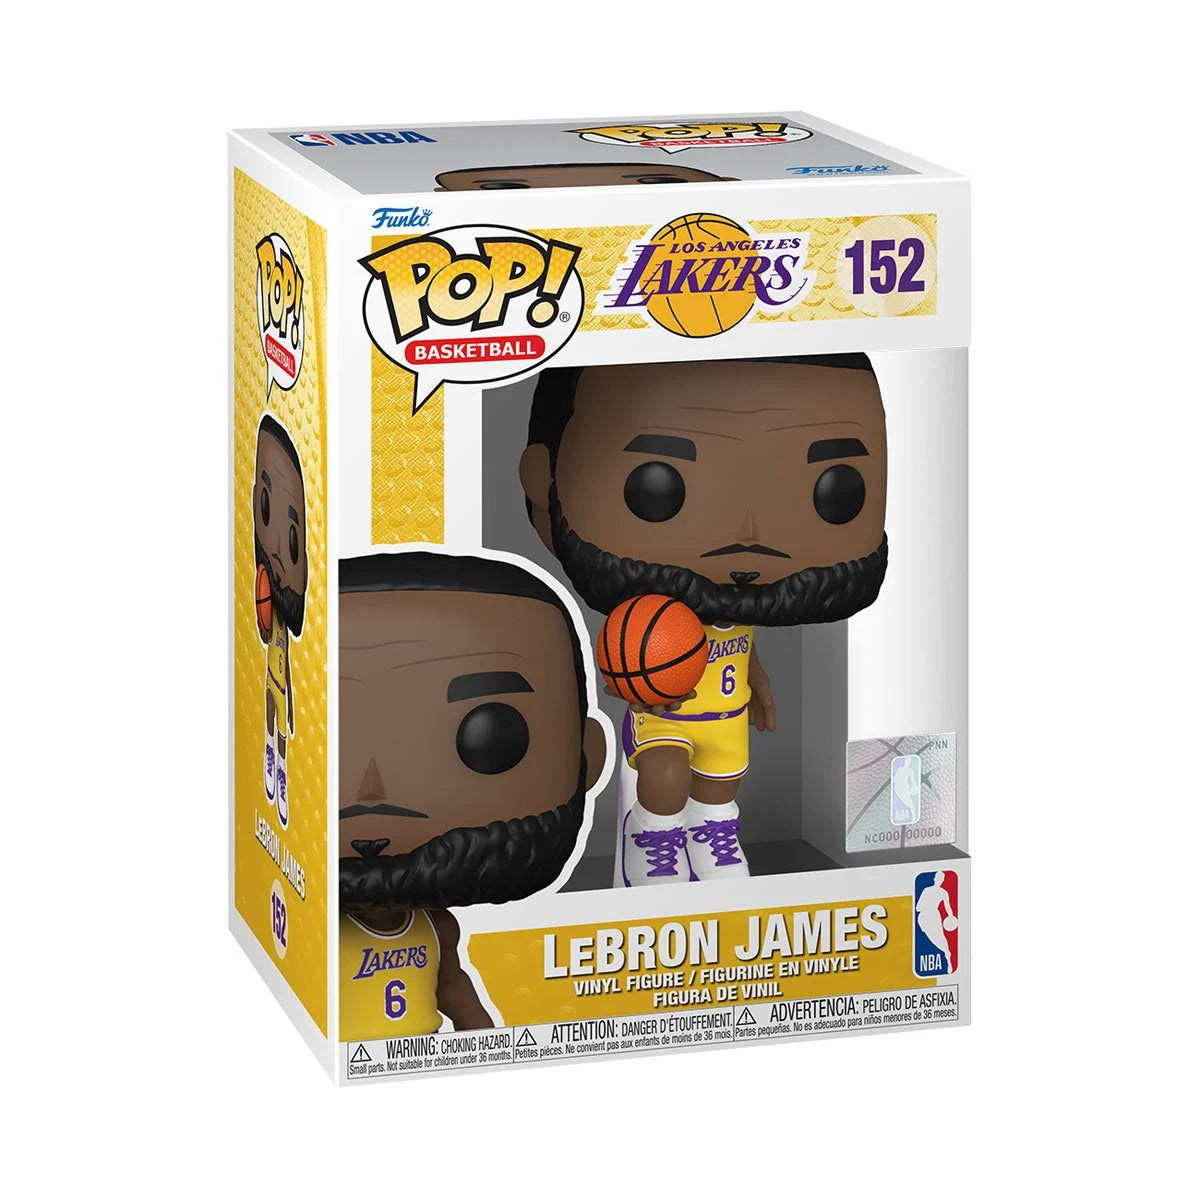 LeBron James #6 NBA Lakers Pop! Vinyl Figure